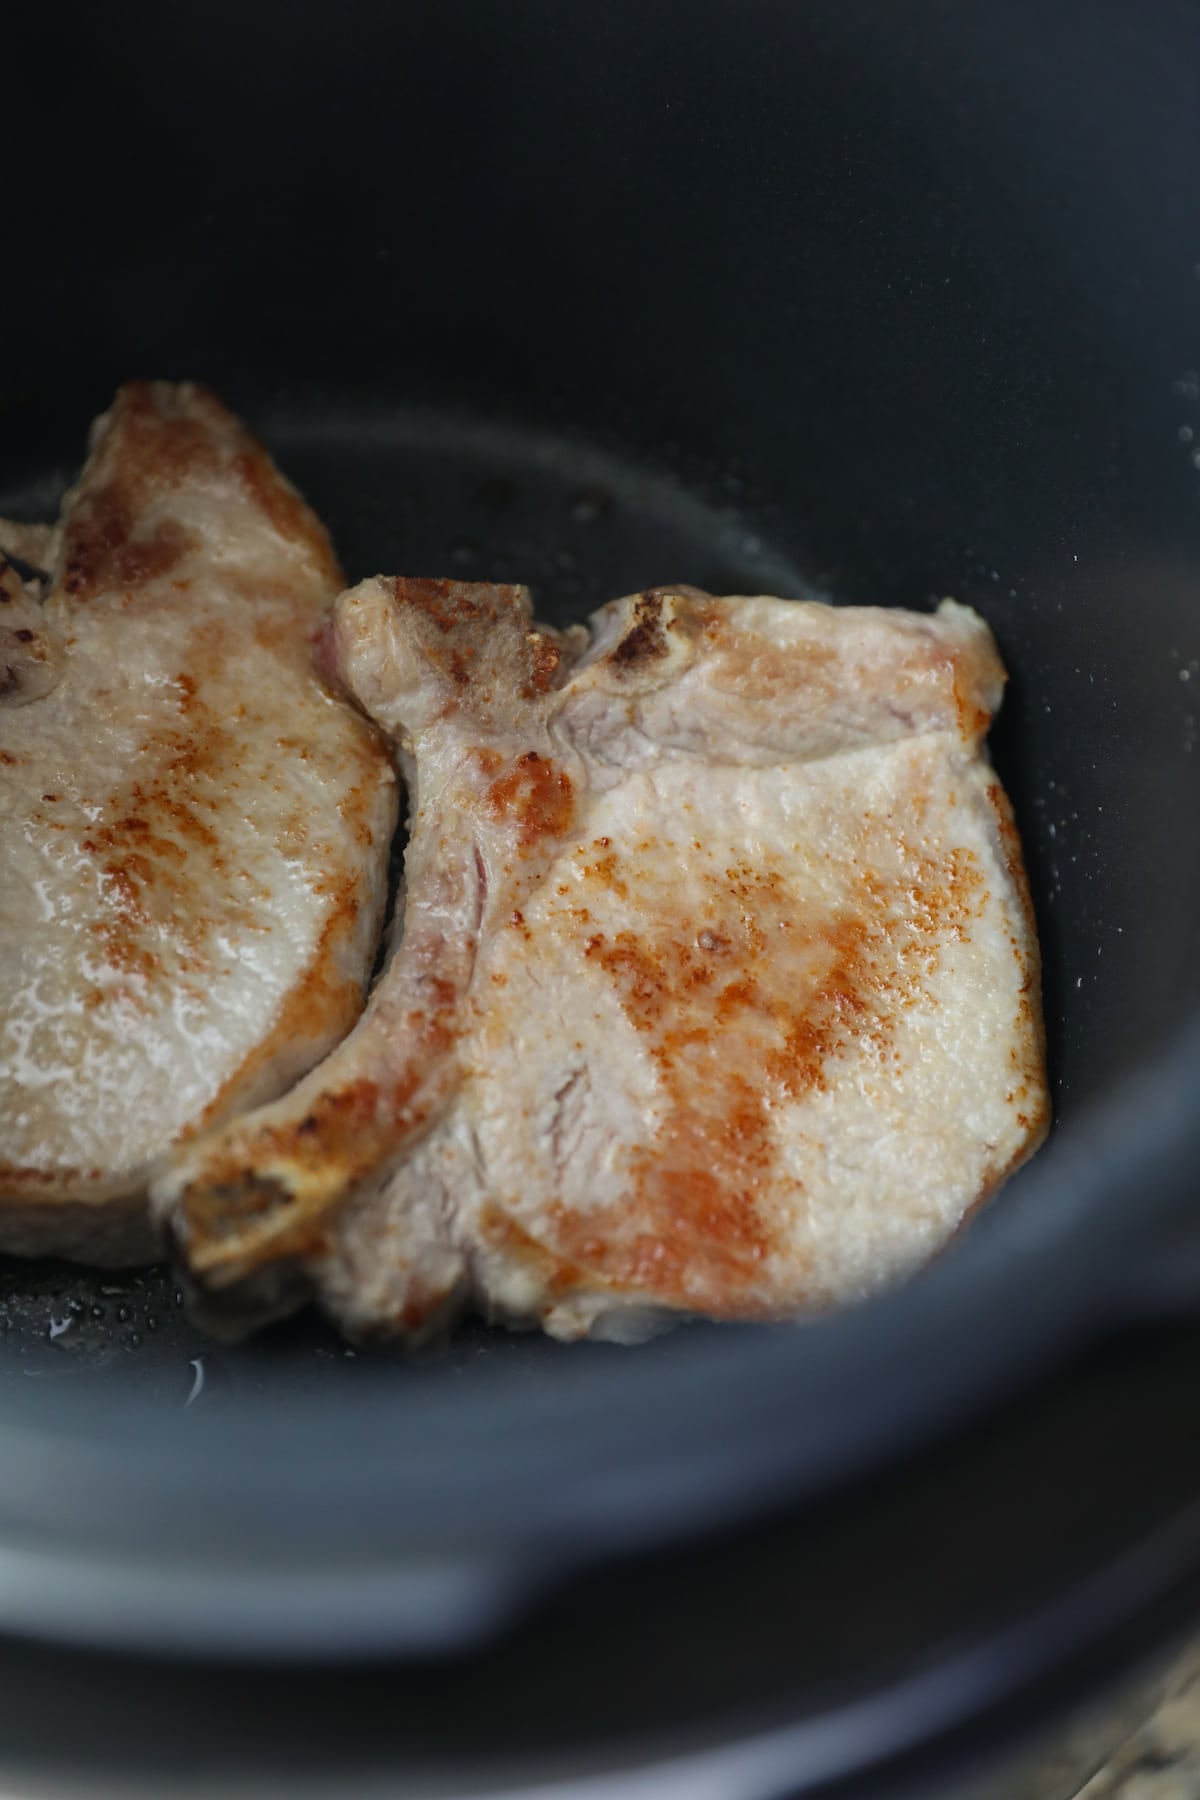 browning pork chops in instant pot